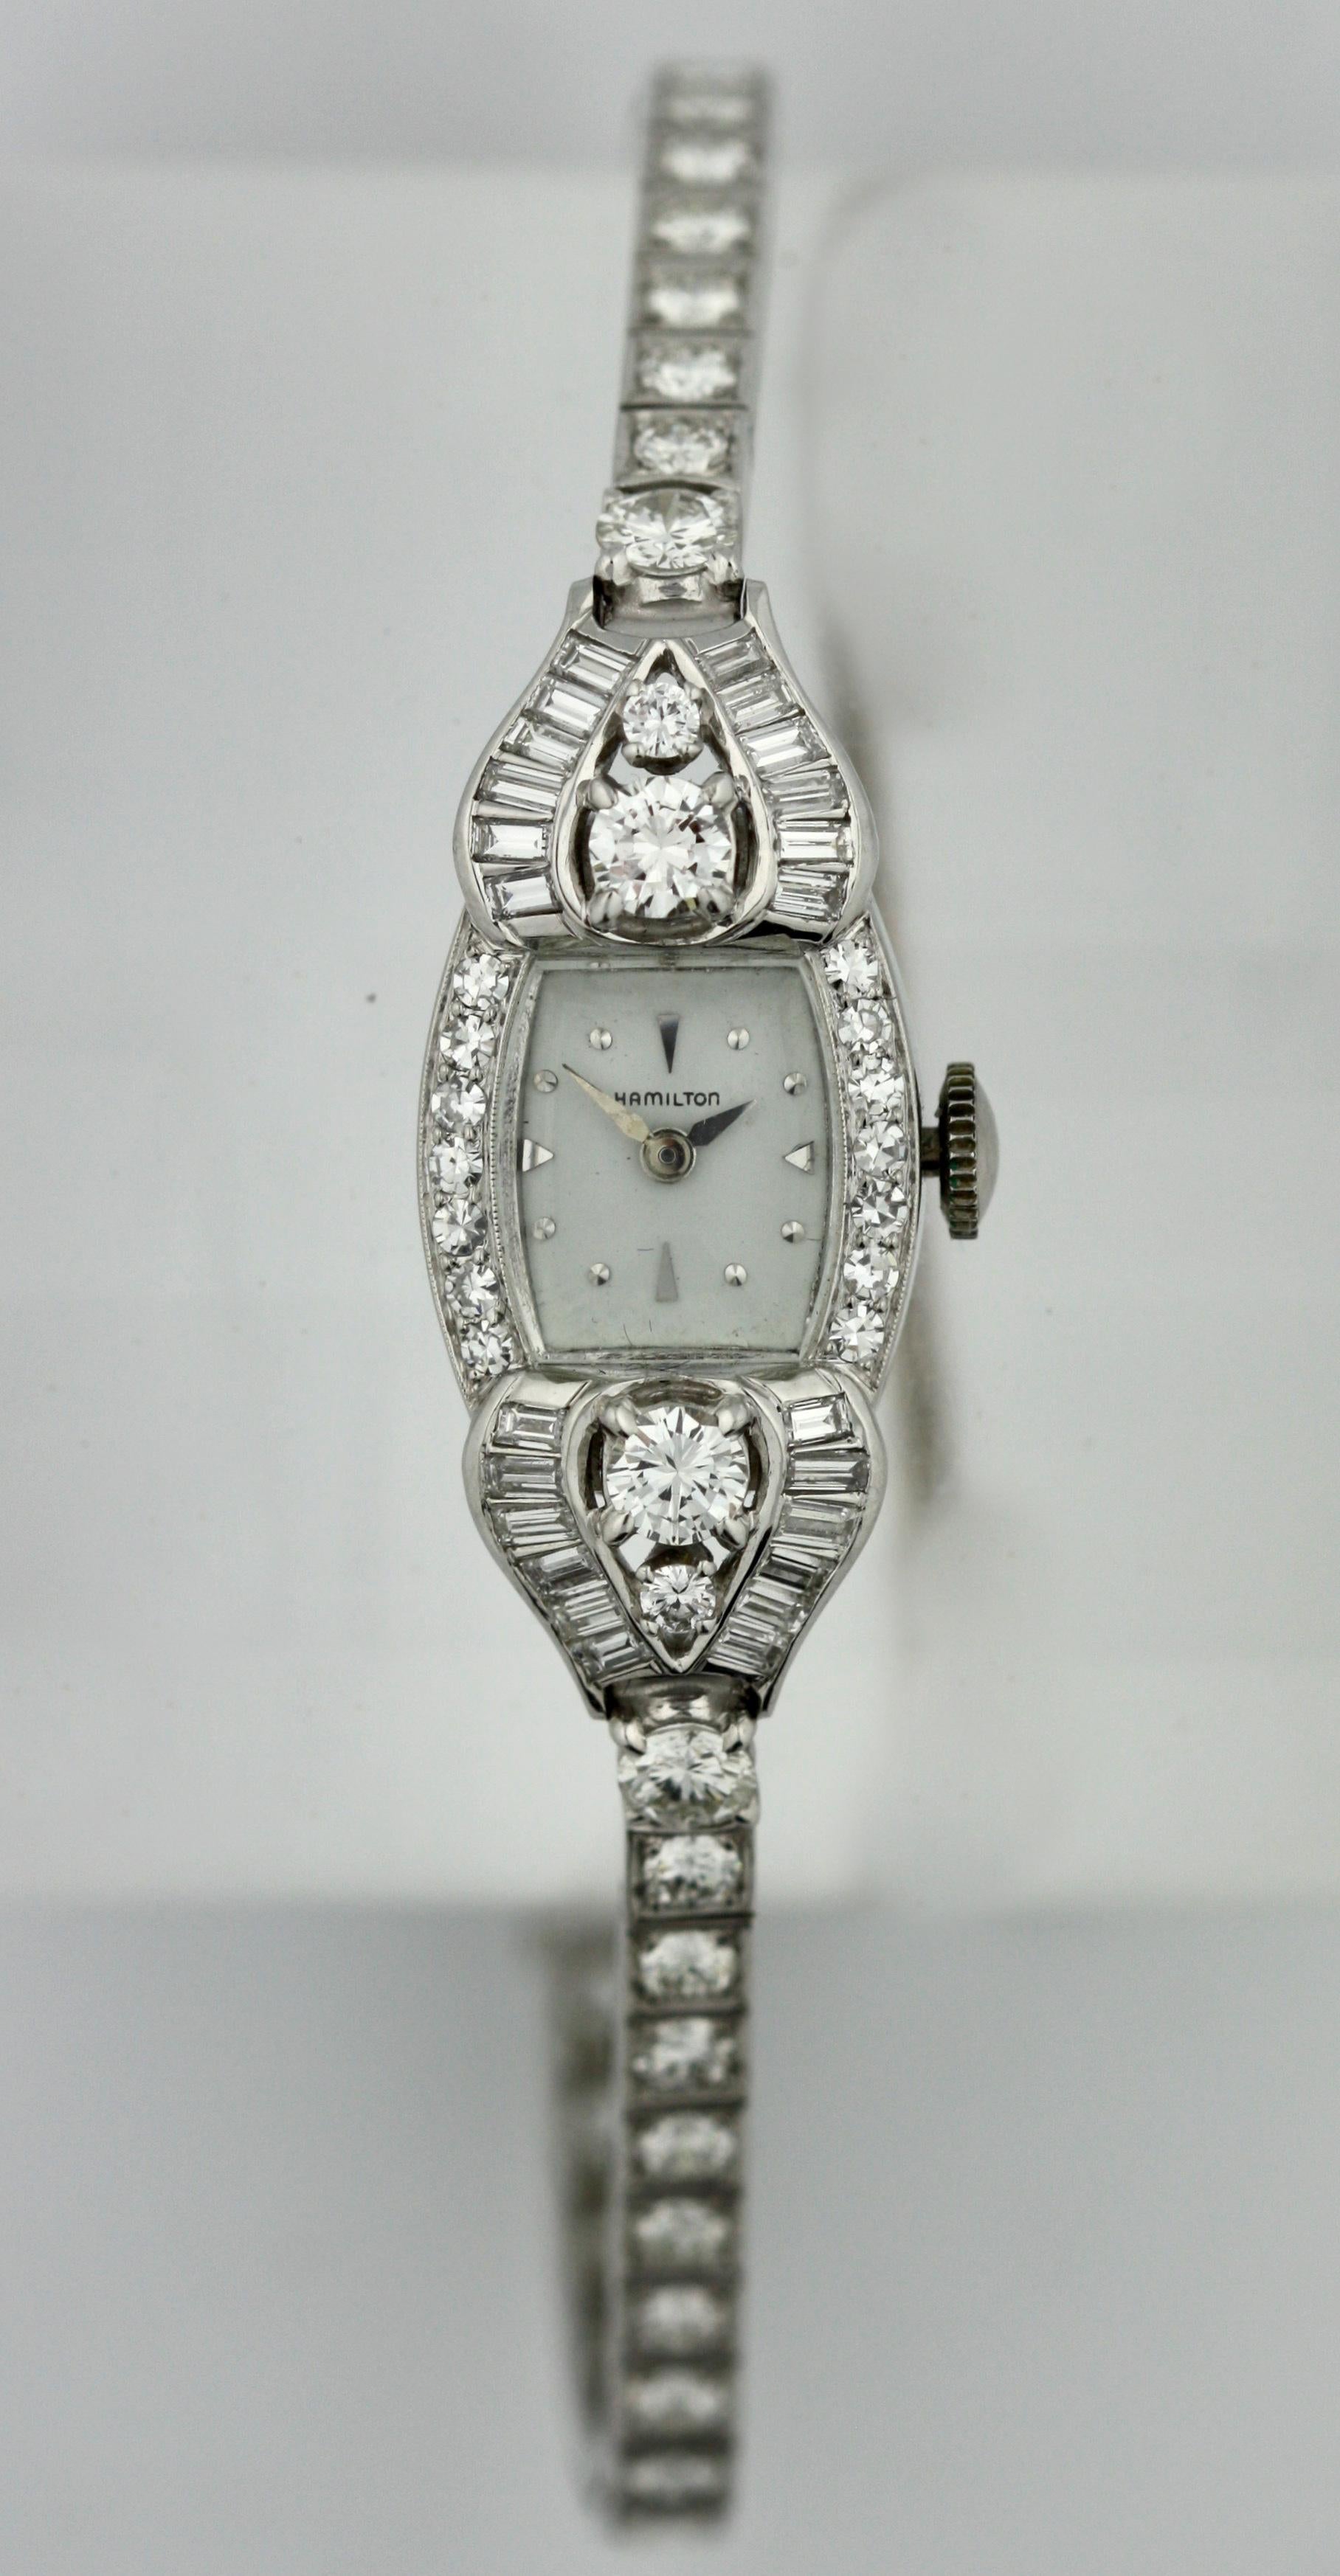 hamilton diamond watches vintage value